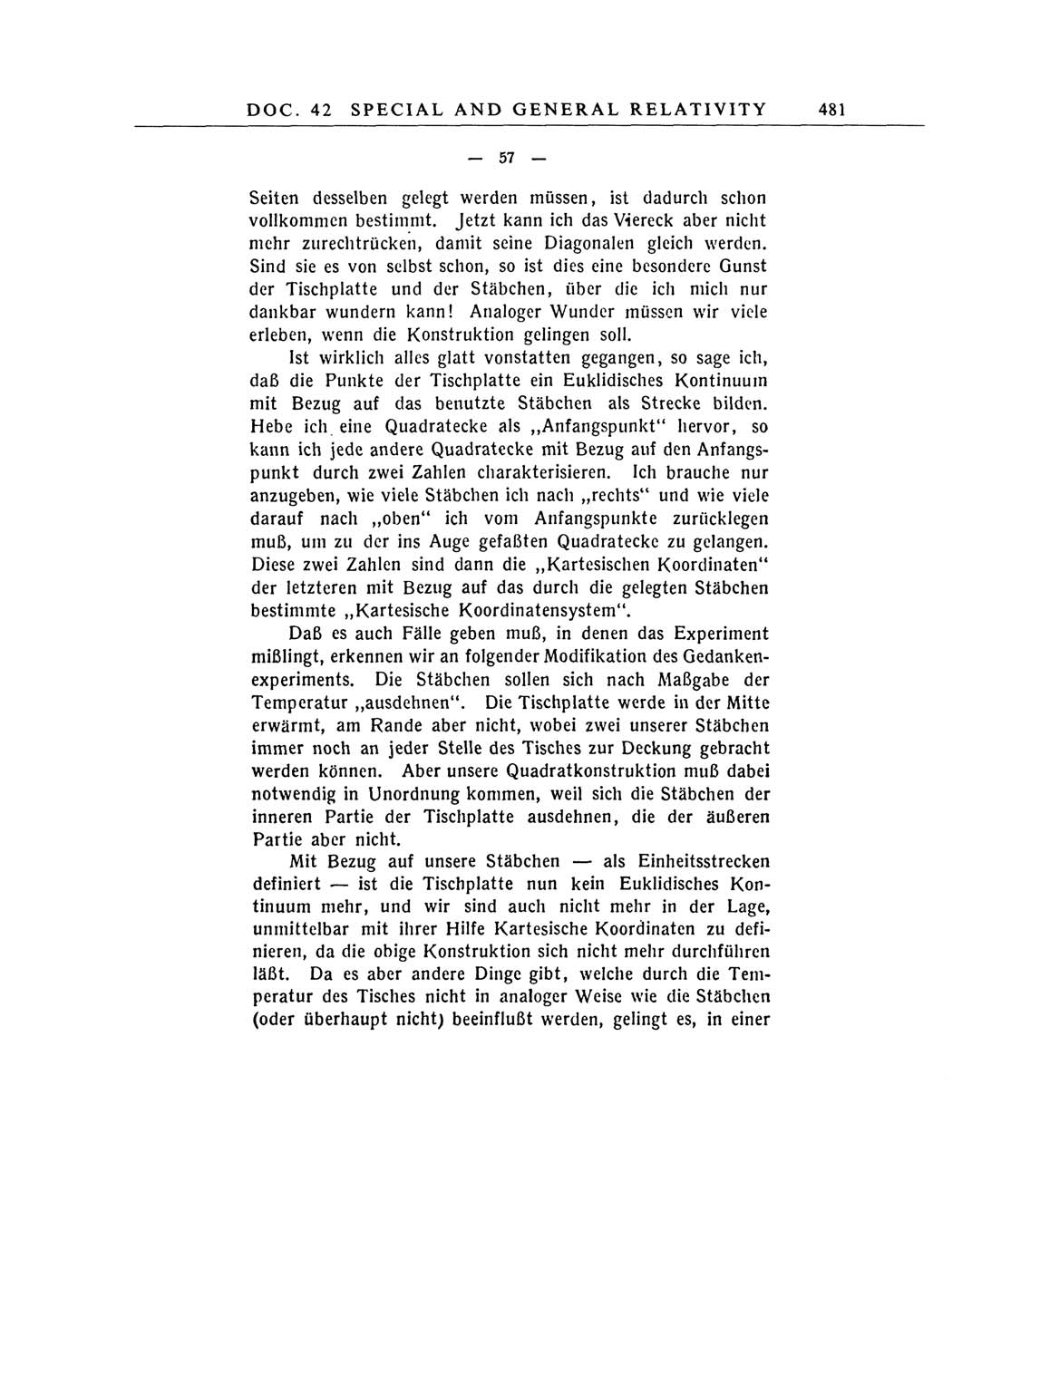 Volume 6: The Berlin Years: Writings, 1914-1917 page 481